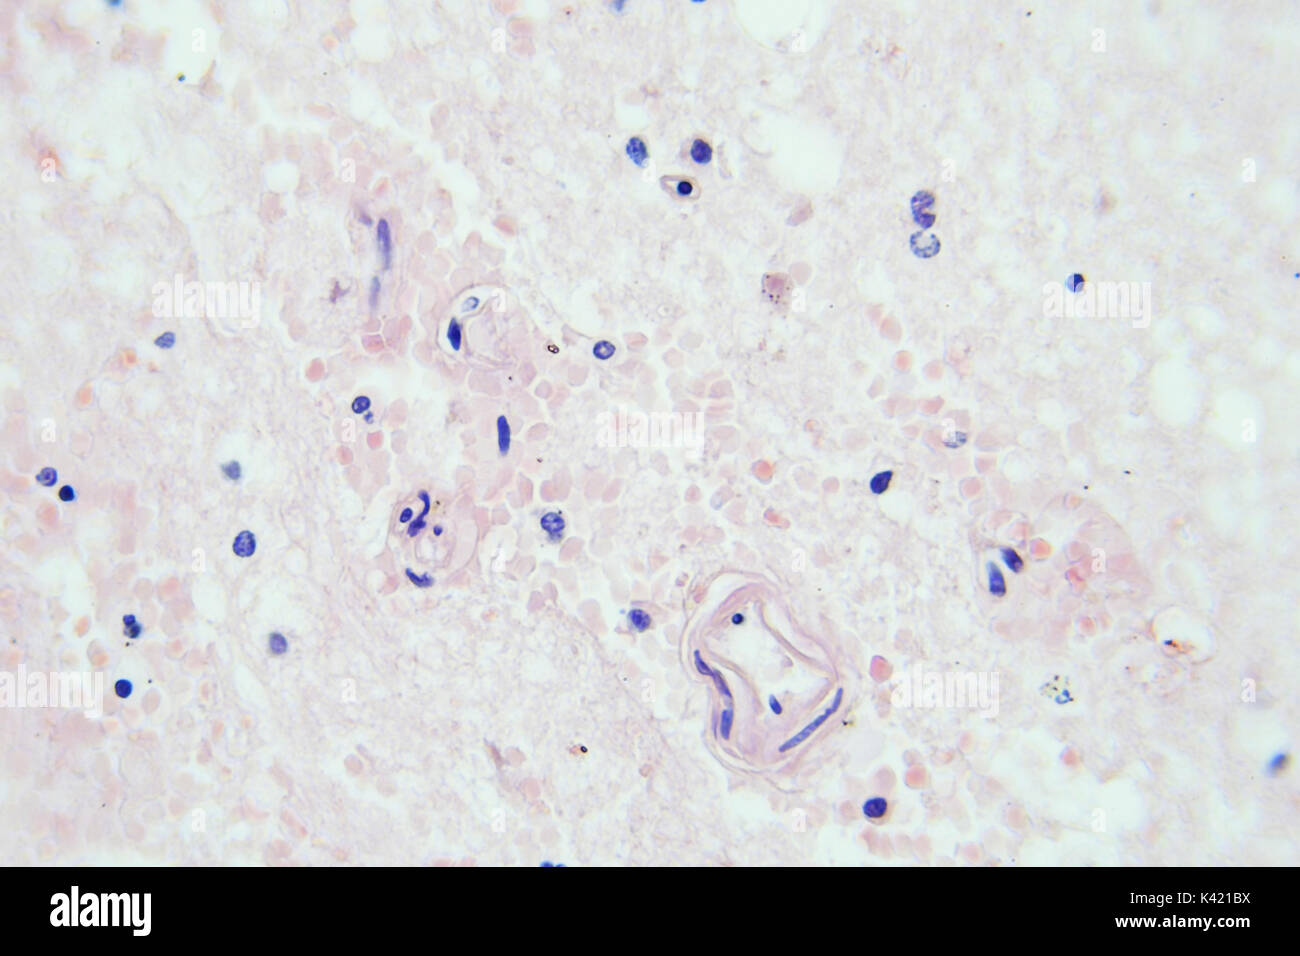 Brain tissue microscopic view magnification x400 Stock Photo